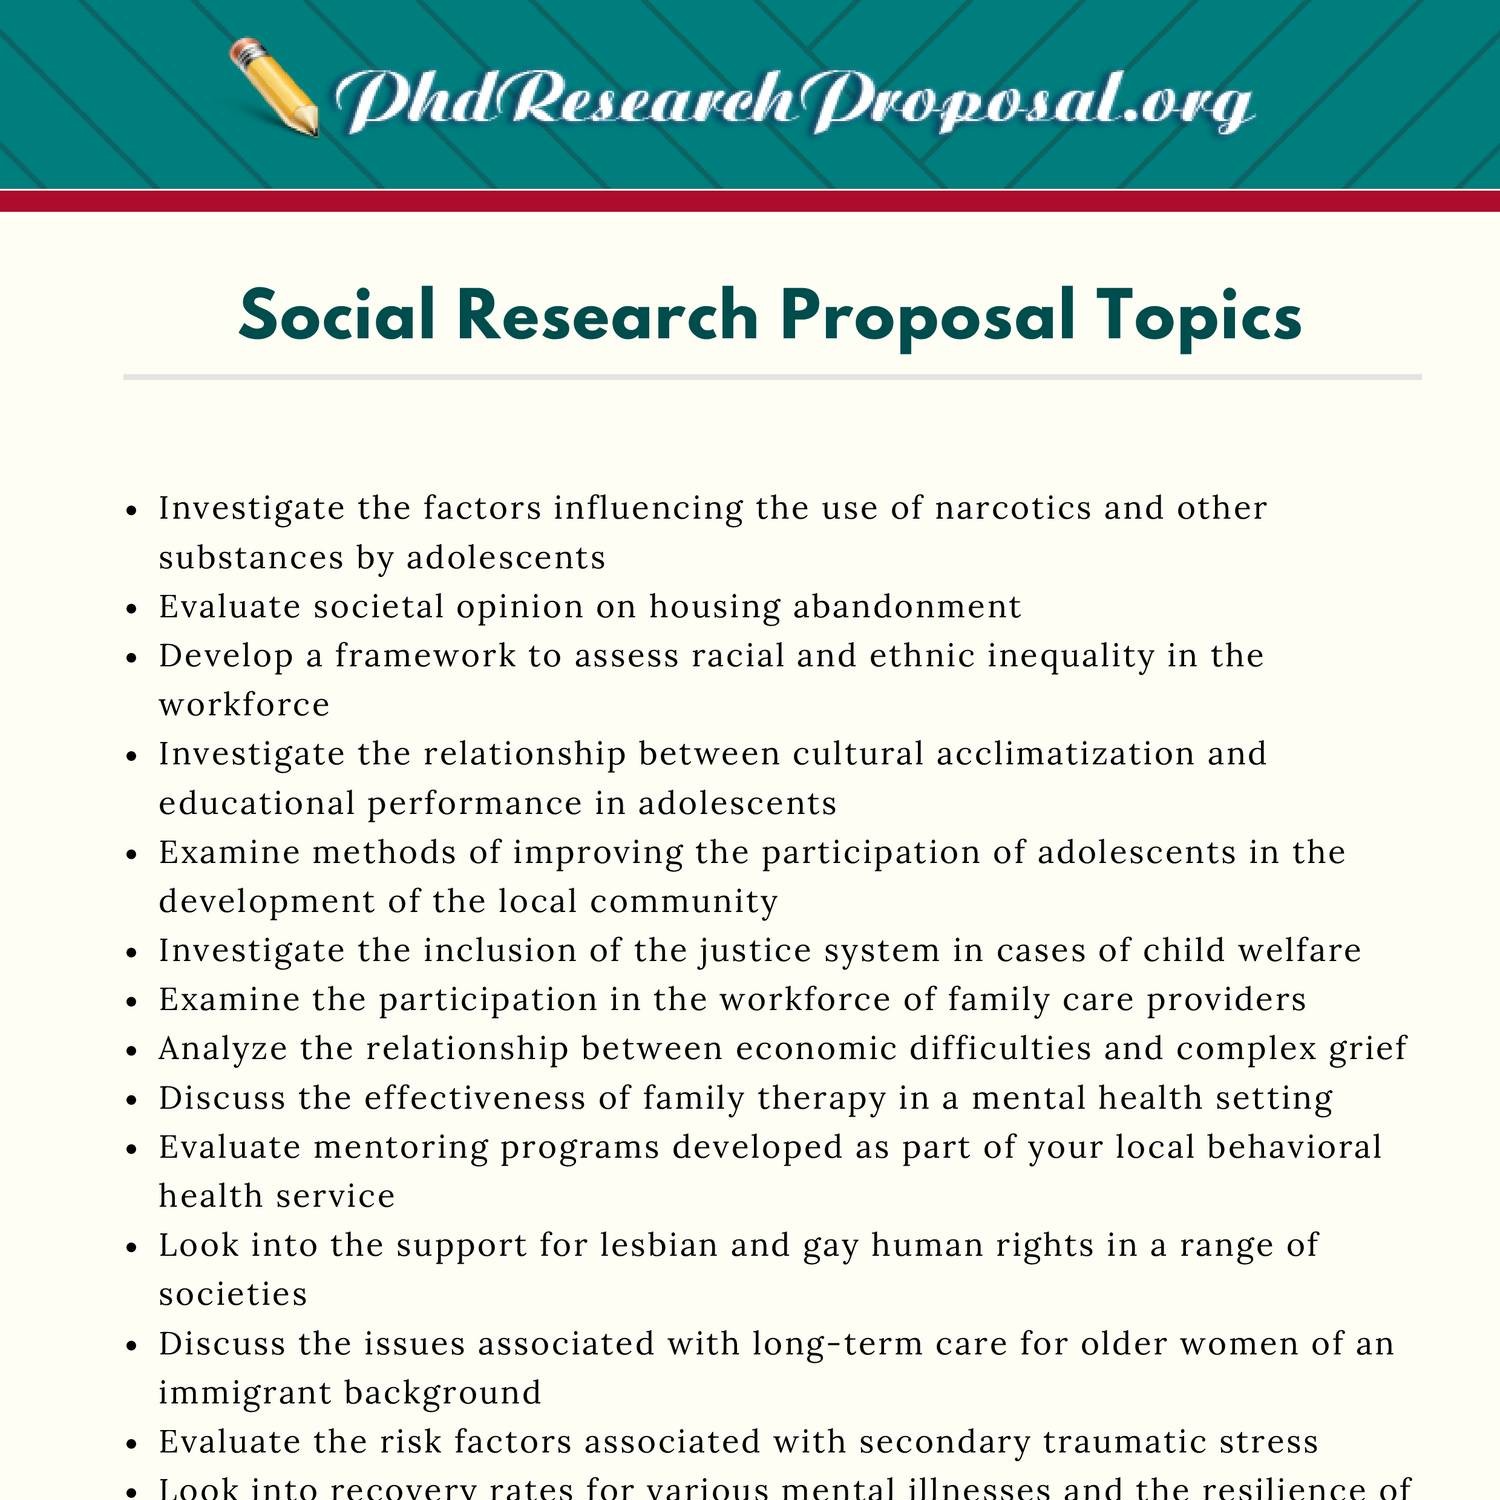 Social care research topics